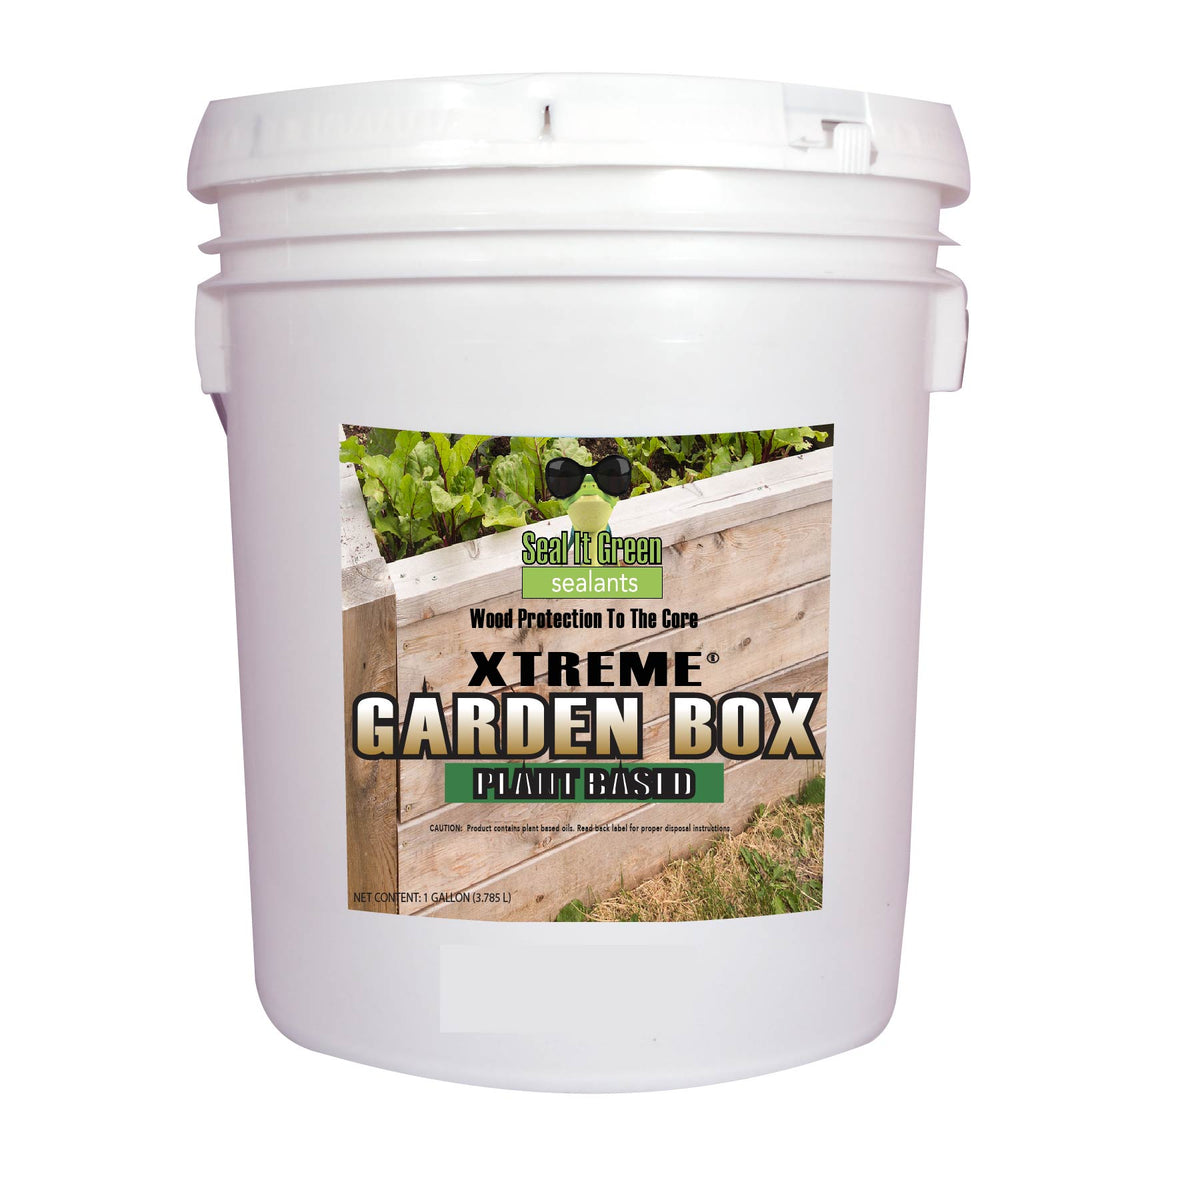 Xtreme garden box plant based sealer